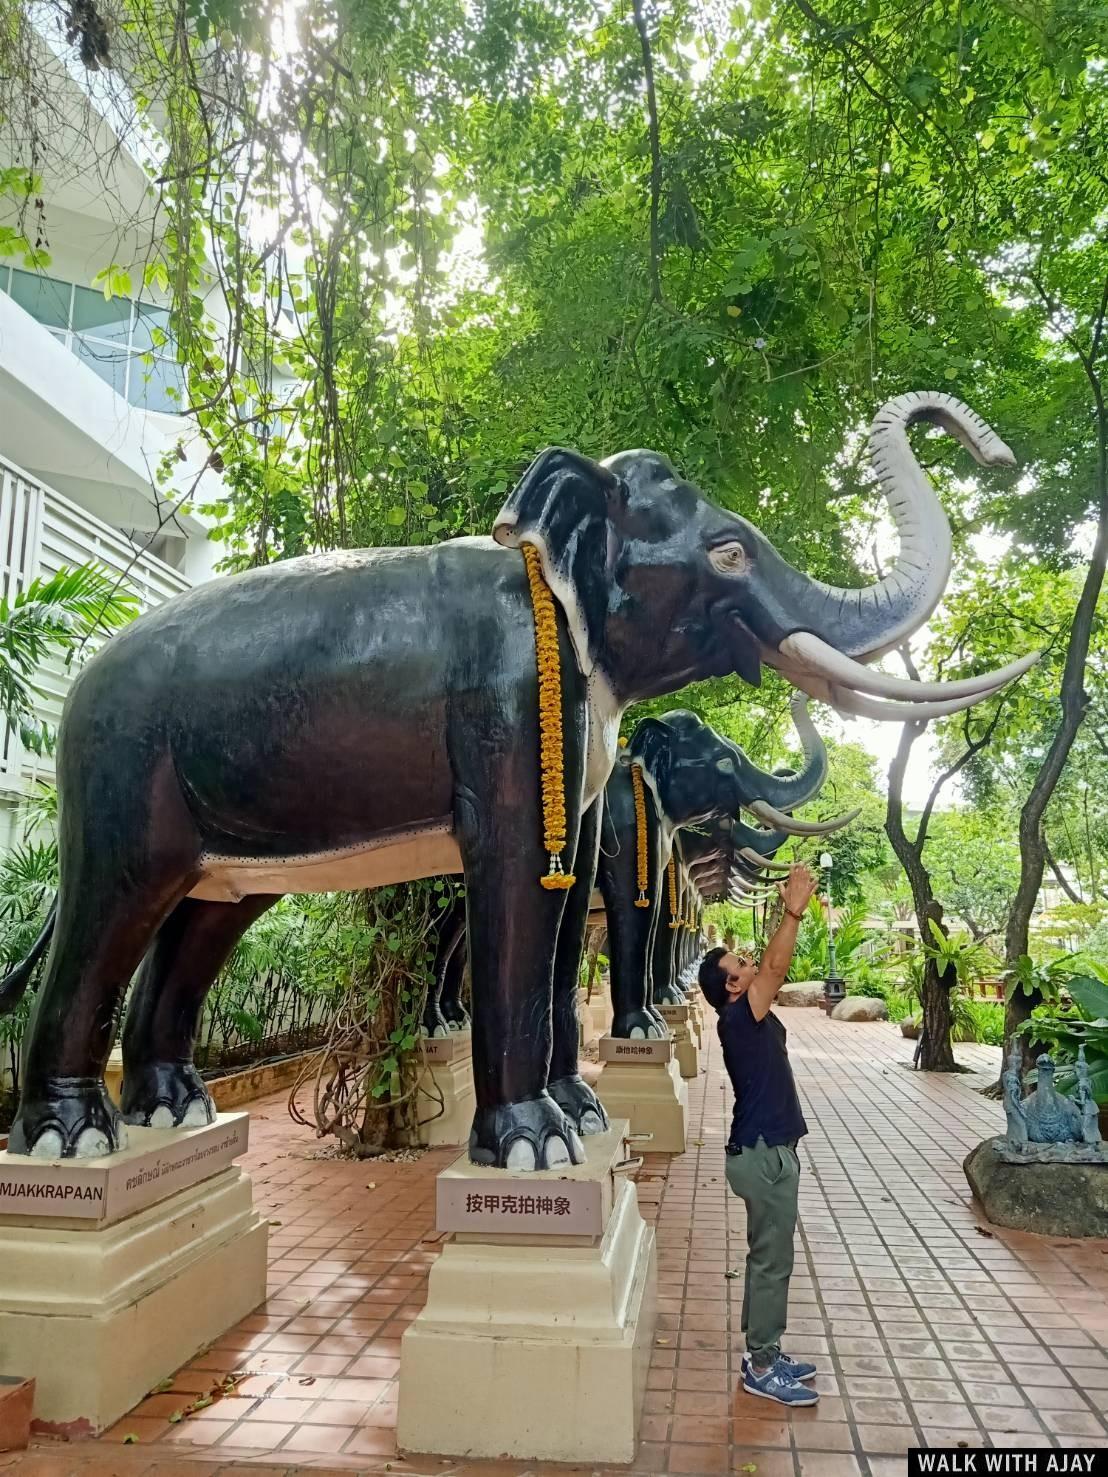 Our Half Day Trip To Erawan Museum (Giant Three-Headed Elephant) : Bangkok, Thailand (Jun’21) 12